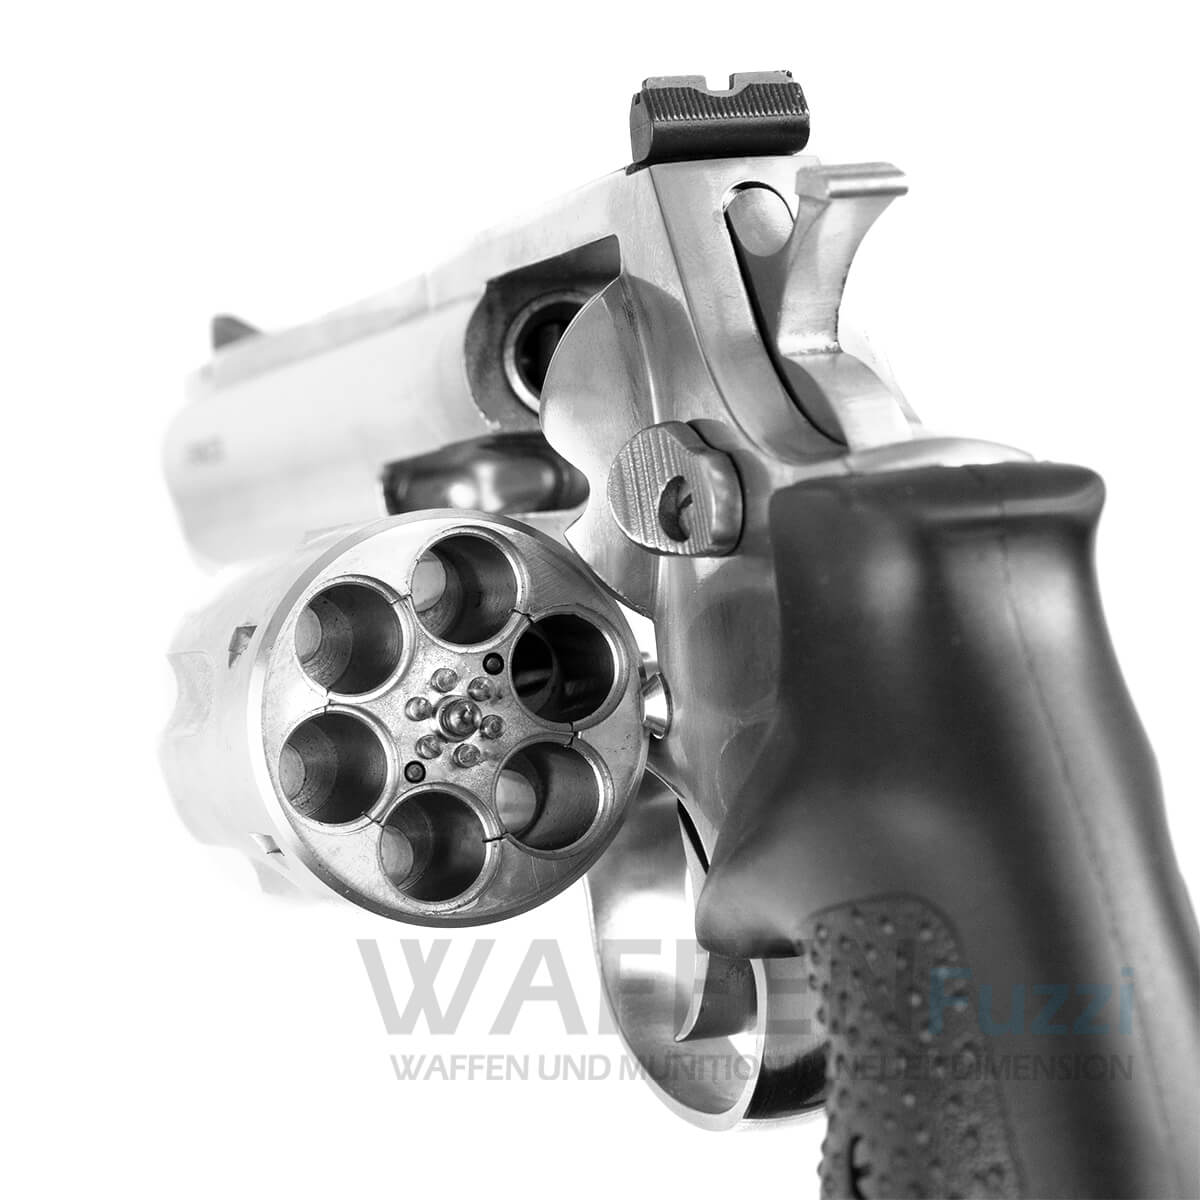 Steel Cop TAC Edelstahl 6 Zoll Revolver